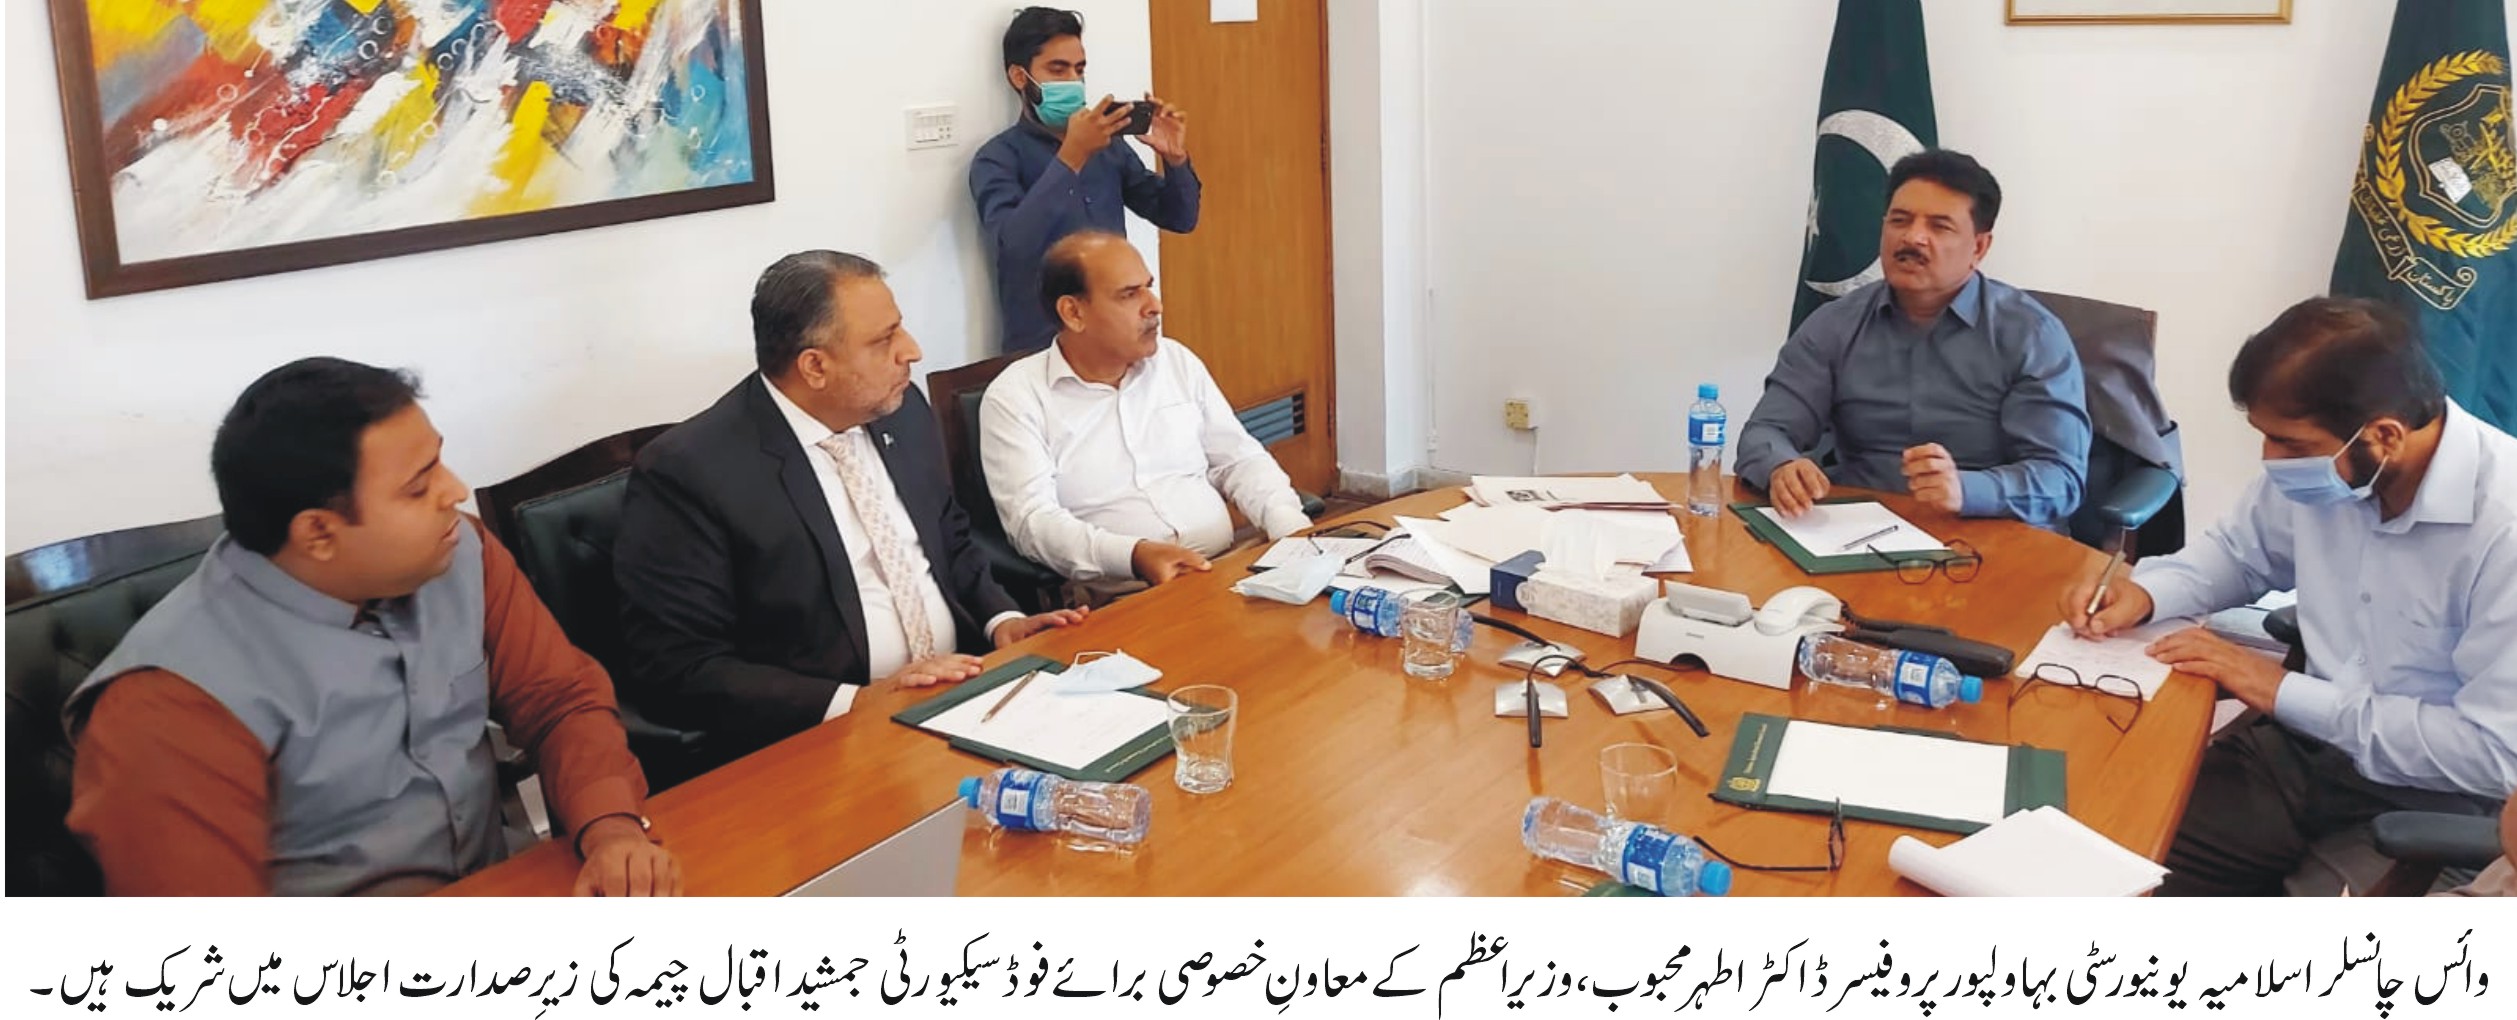 WVC meets with Jamshed Iqbal Cheema at Islamabad